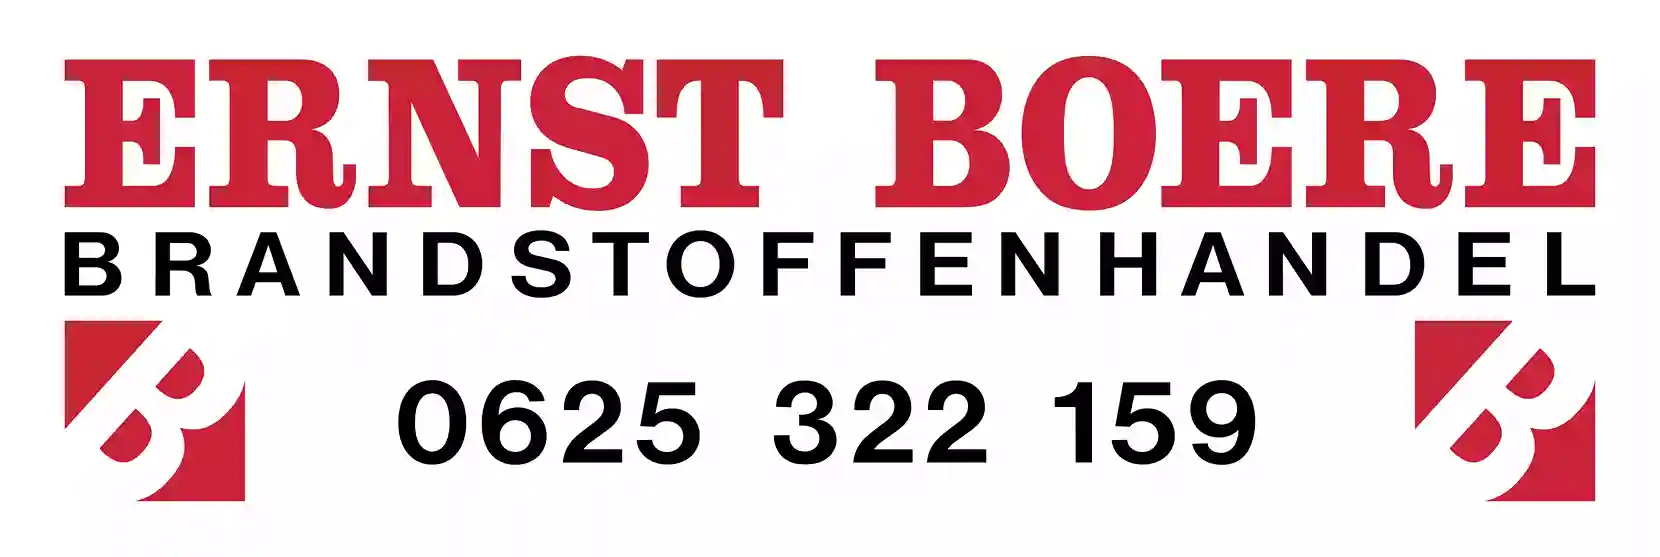 freecompress-Ernst-Boere-150x50